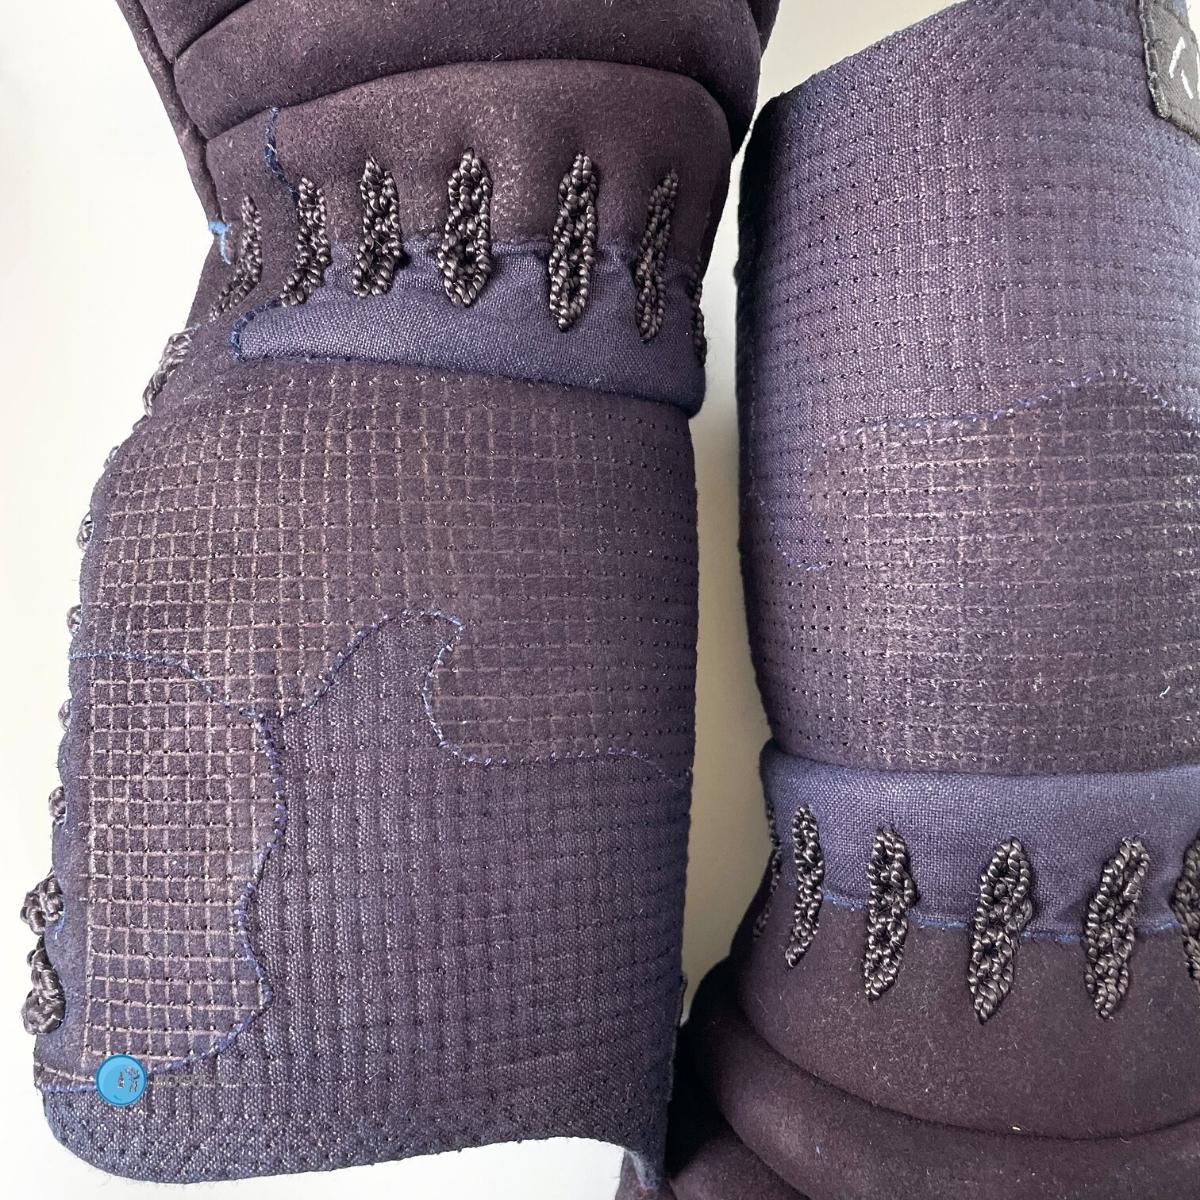 [Japanese Deer Leather] 1.2BU Stitching Premium Quality Hand Stitched Kote #4